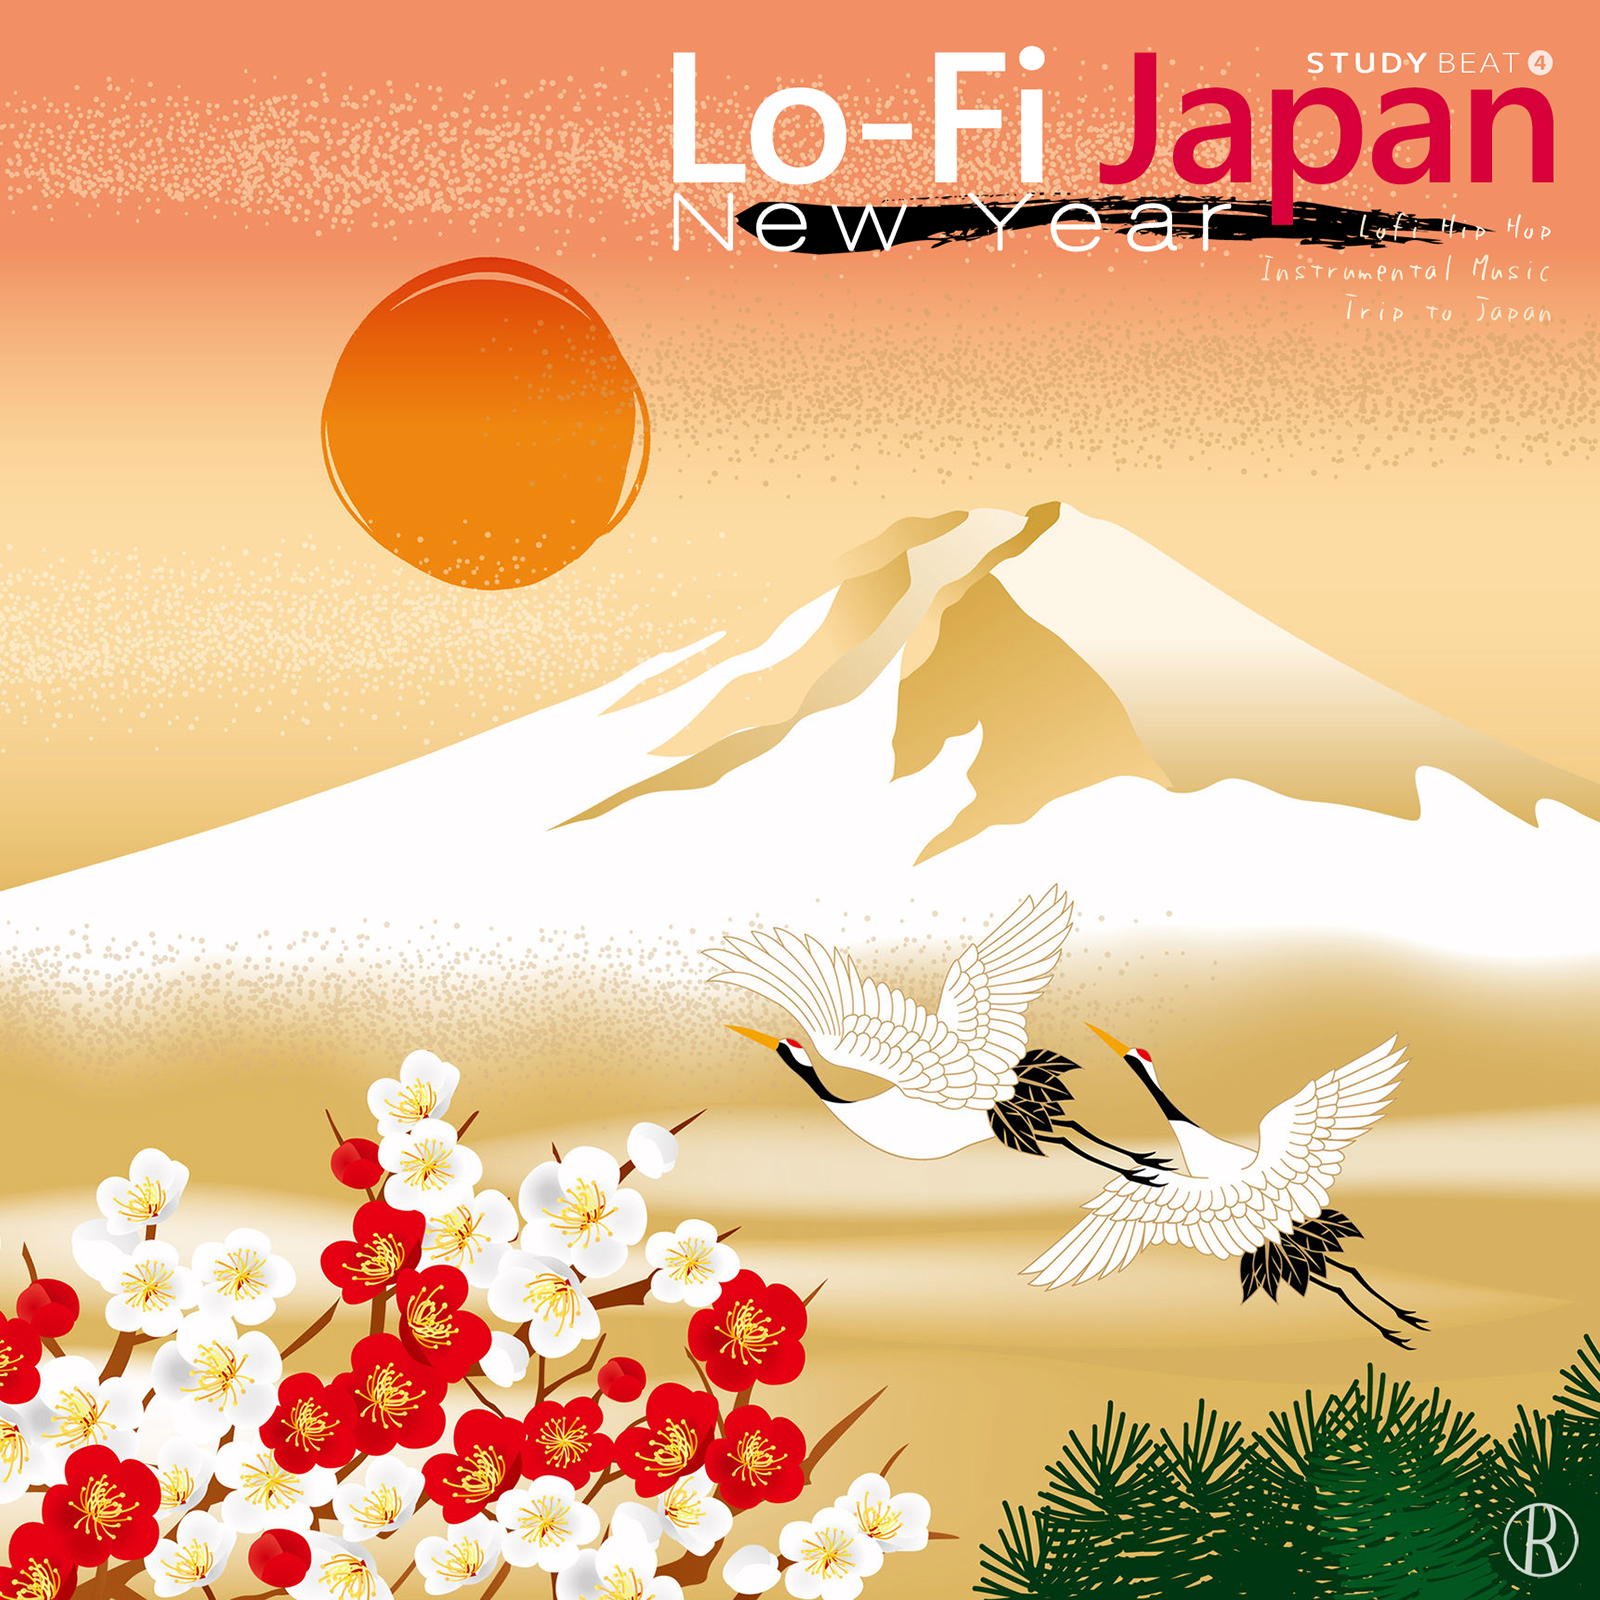 Lo-Fi Japan – Lo-Fi New Year (Lofi Hip Hop Instrumental Music Trip to Japan / お正月) – Study Beat 4